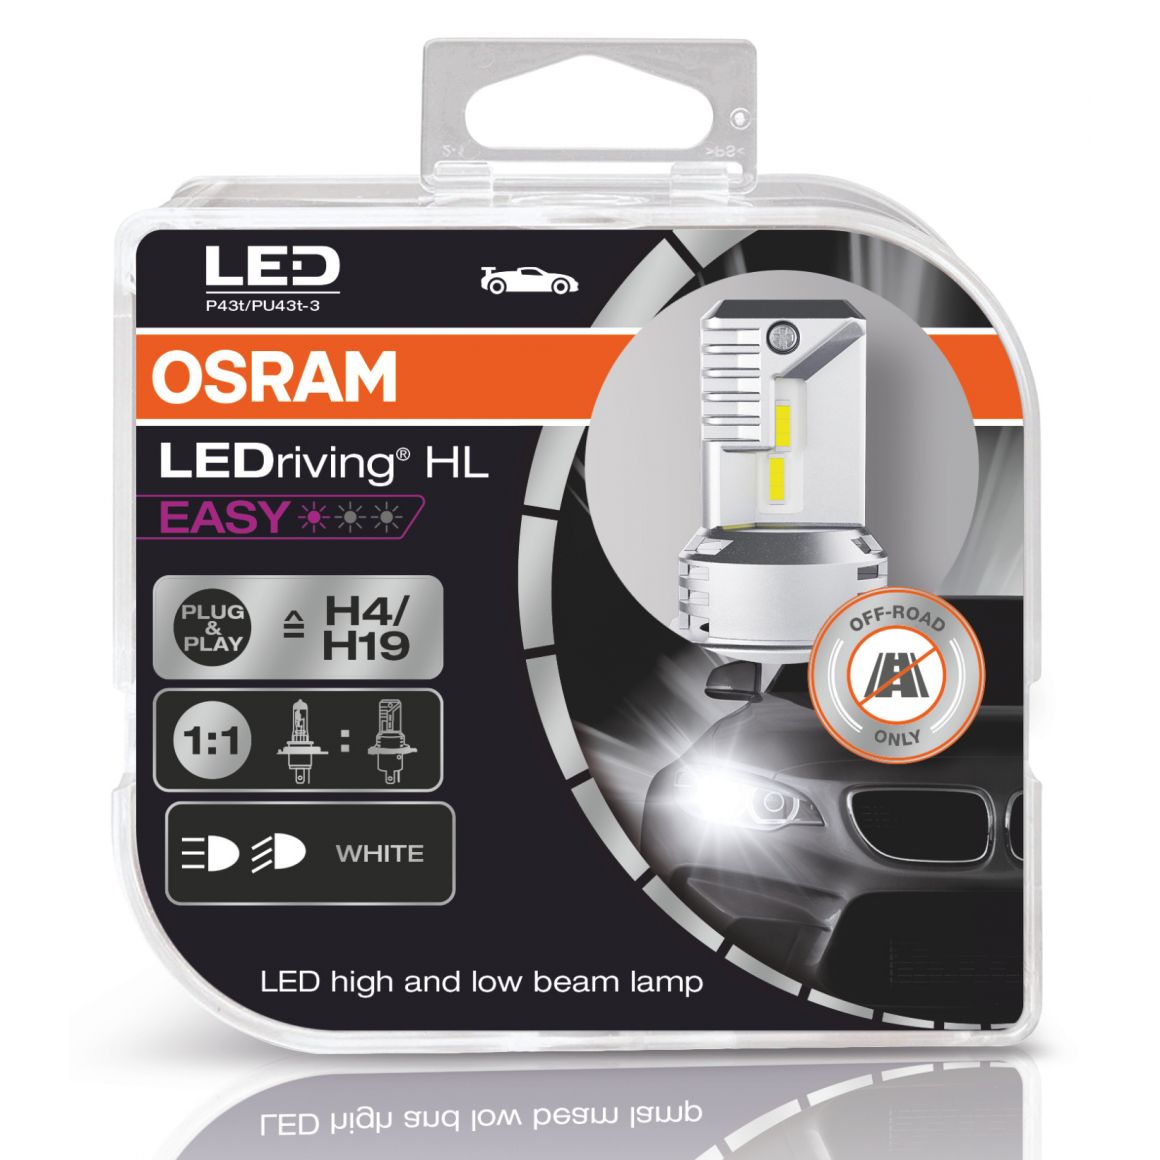 OSRAM LEDriving HL EASY H4/H19 - Stigliano Store